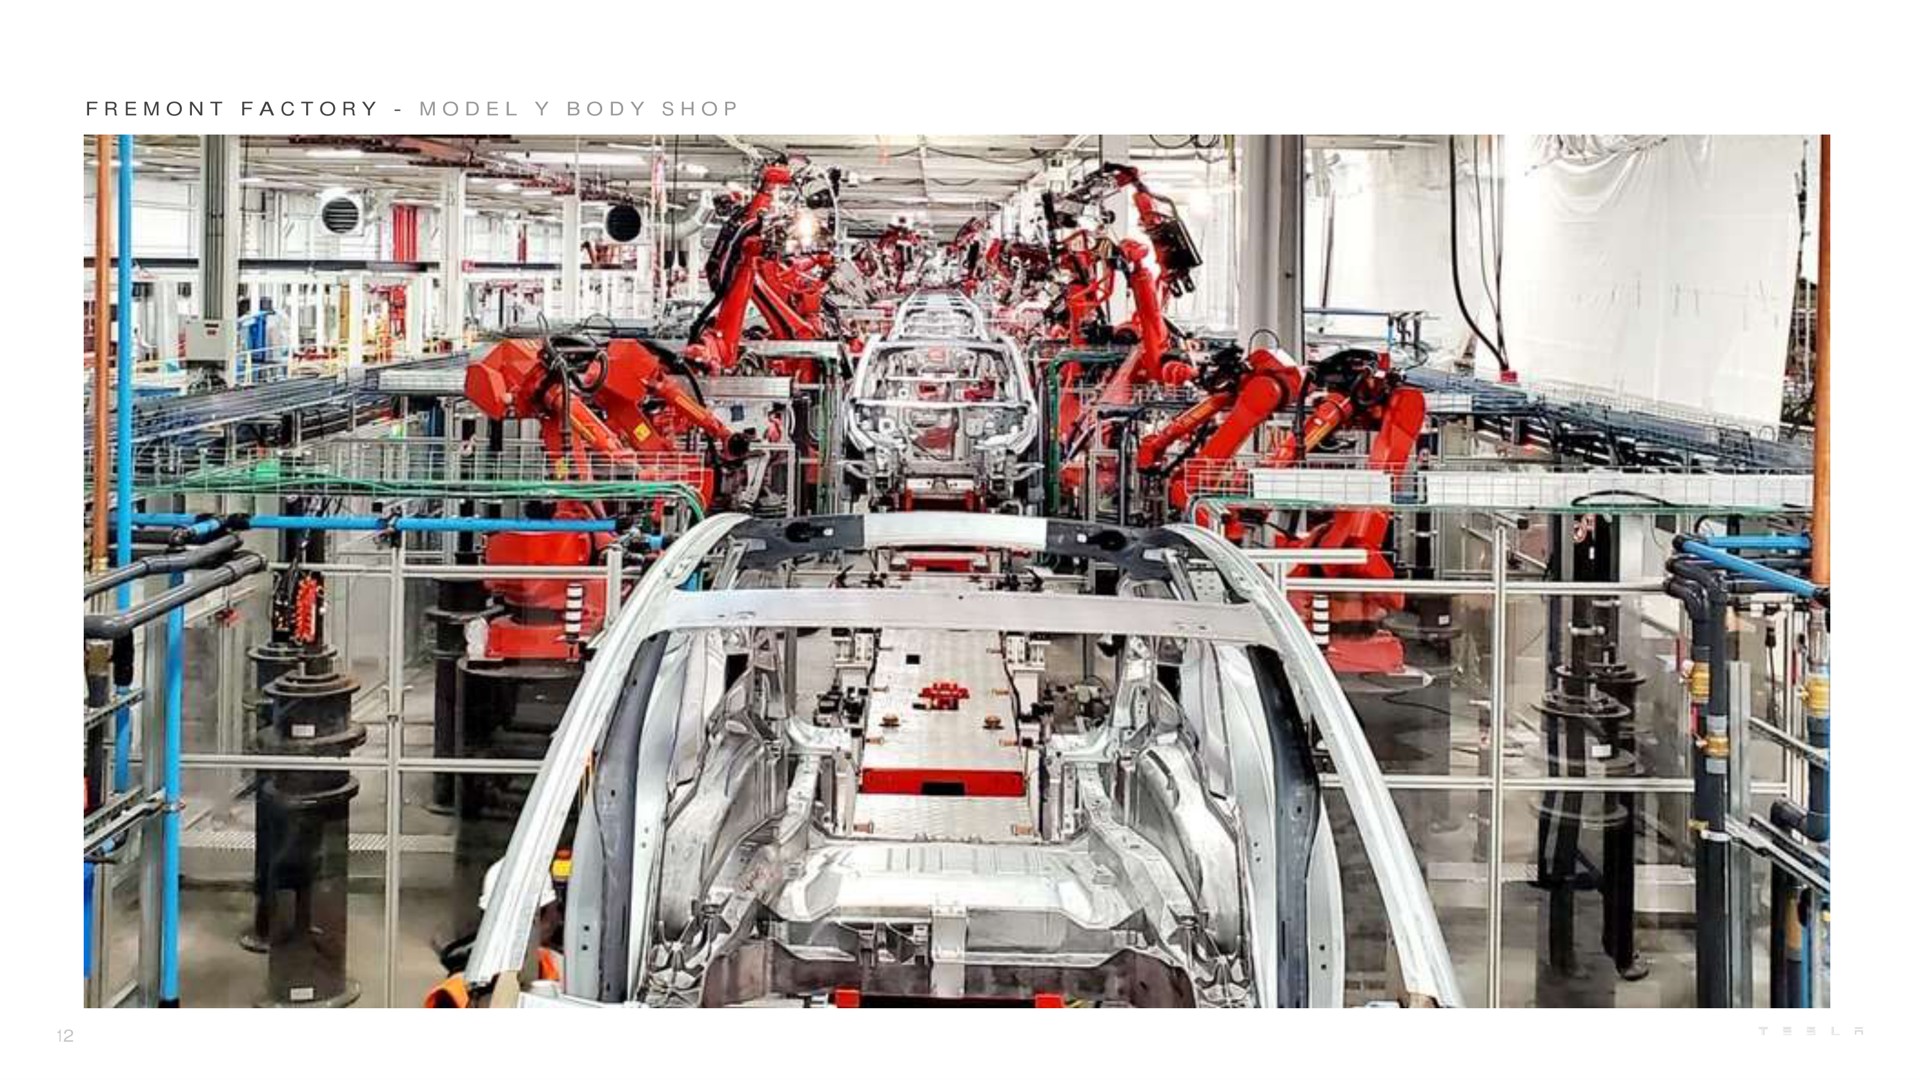 a factory model body shop | Tesla